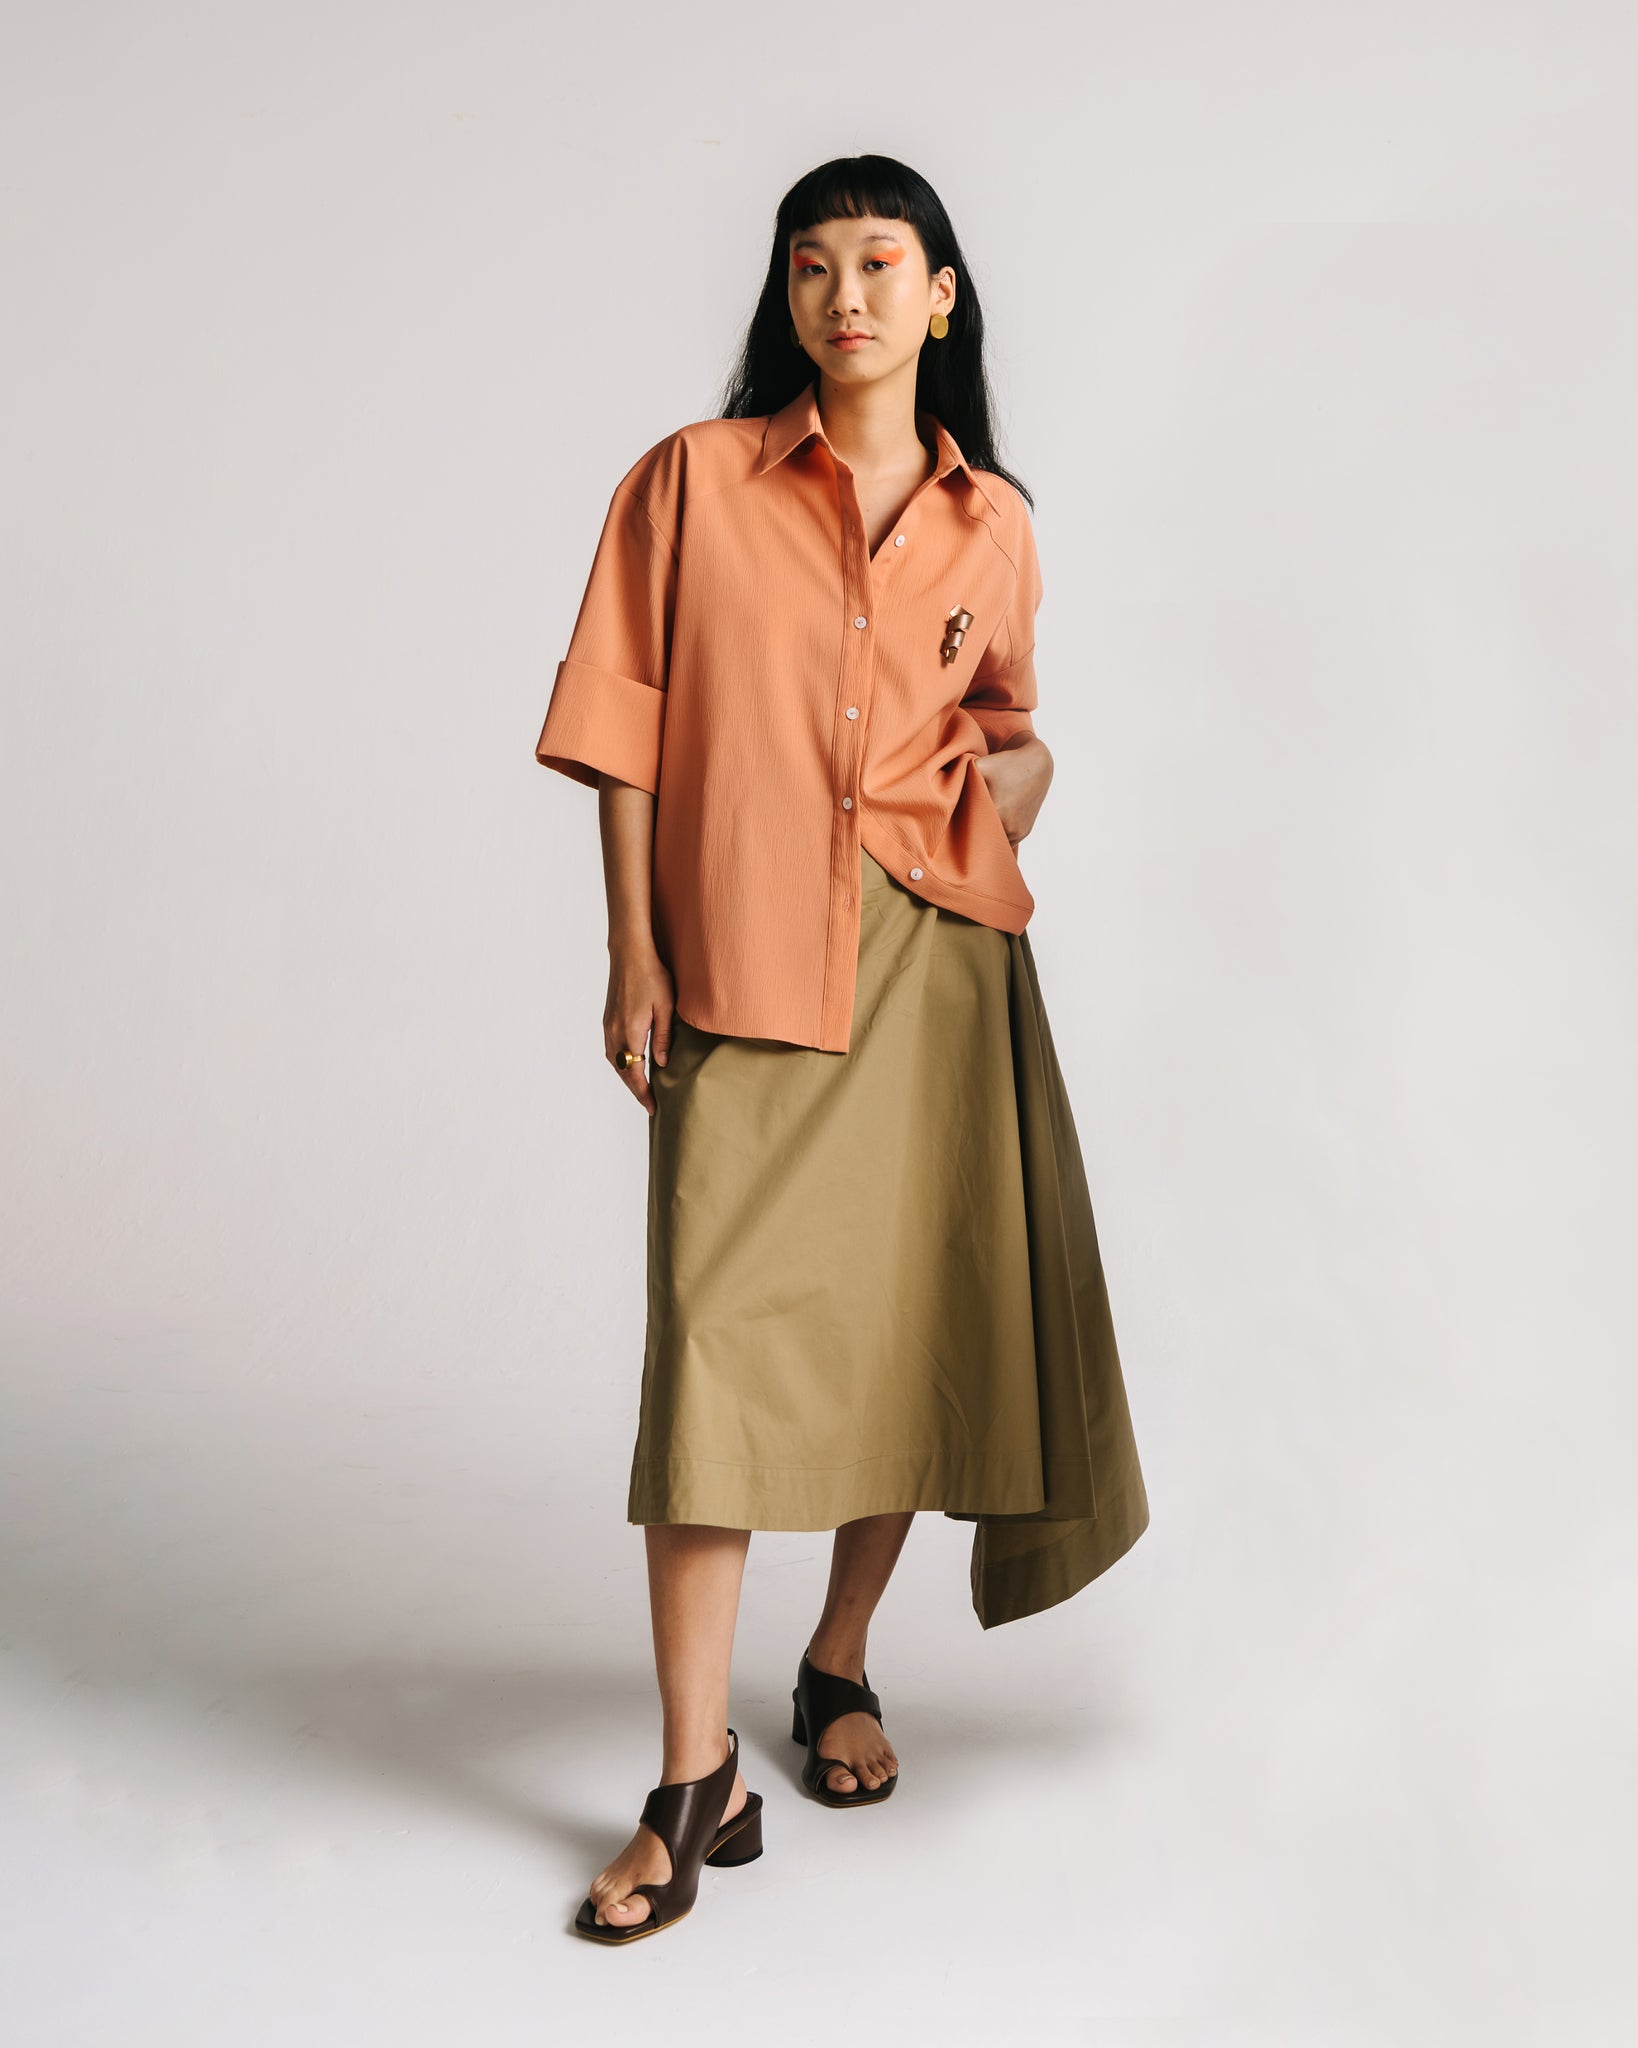 Asymmetrical Midi Skirt (Khaki)